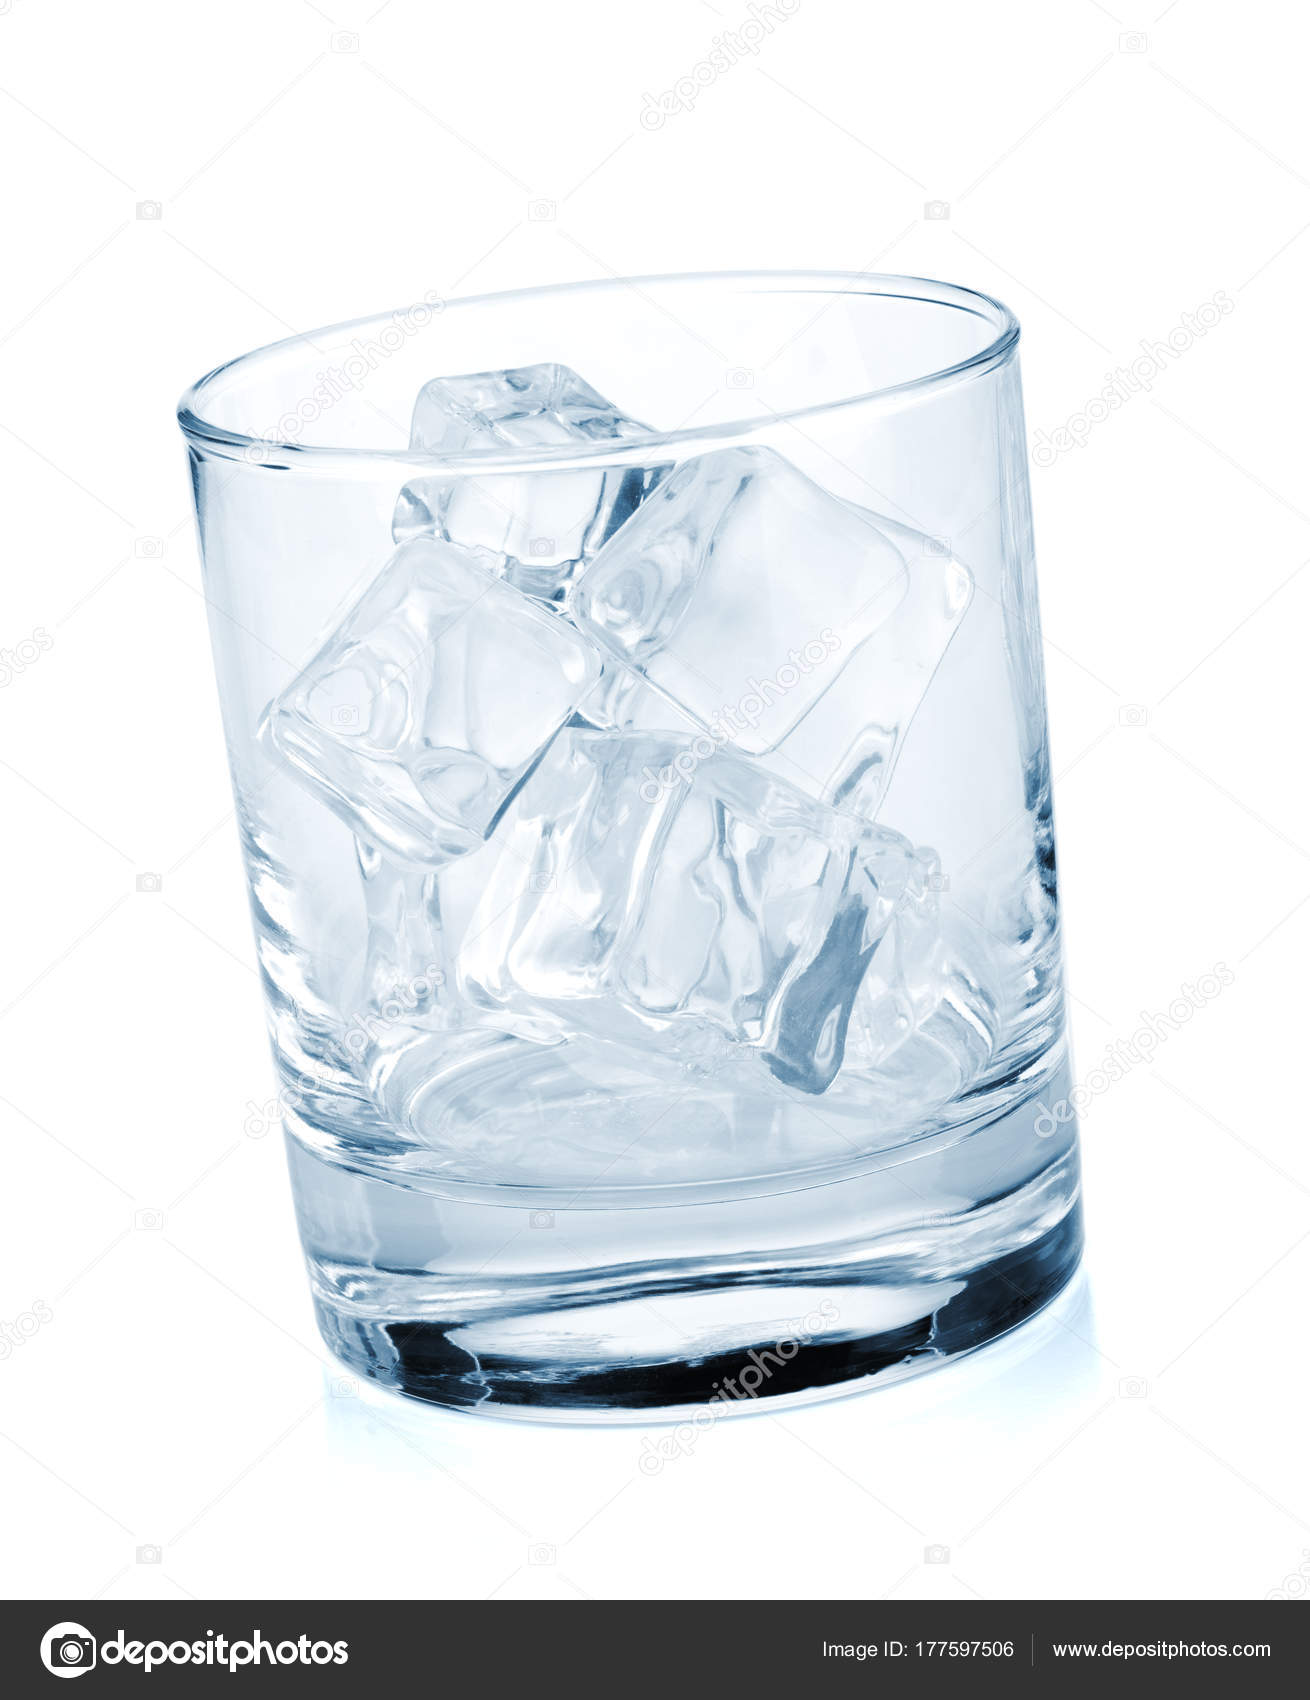 https://st3.depositphotos.com/1001069/17759/i/1600/depositphotos_177597506-stock-photo-glass-ice-cubes-isolated-white.jpg